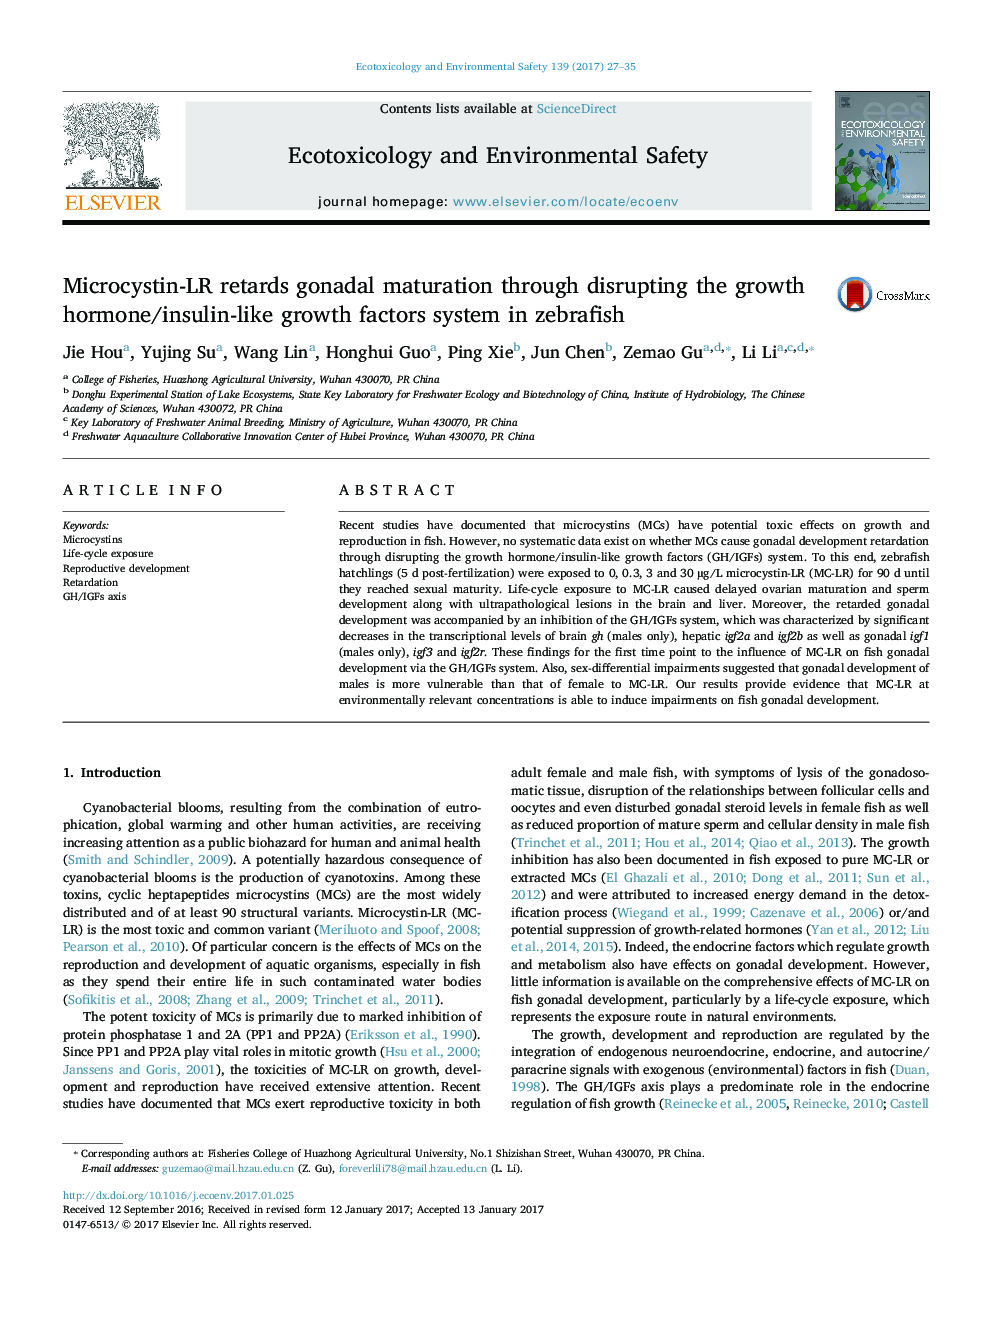 Microcystin-LR retards gonadal maturation through disrupting the growth hormone/insulin-like growth factors system in zebrafish